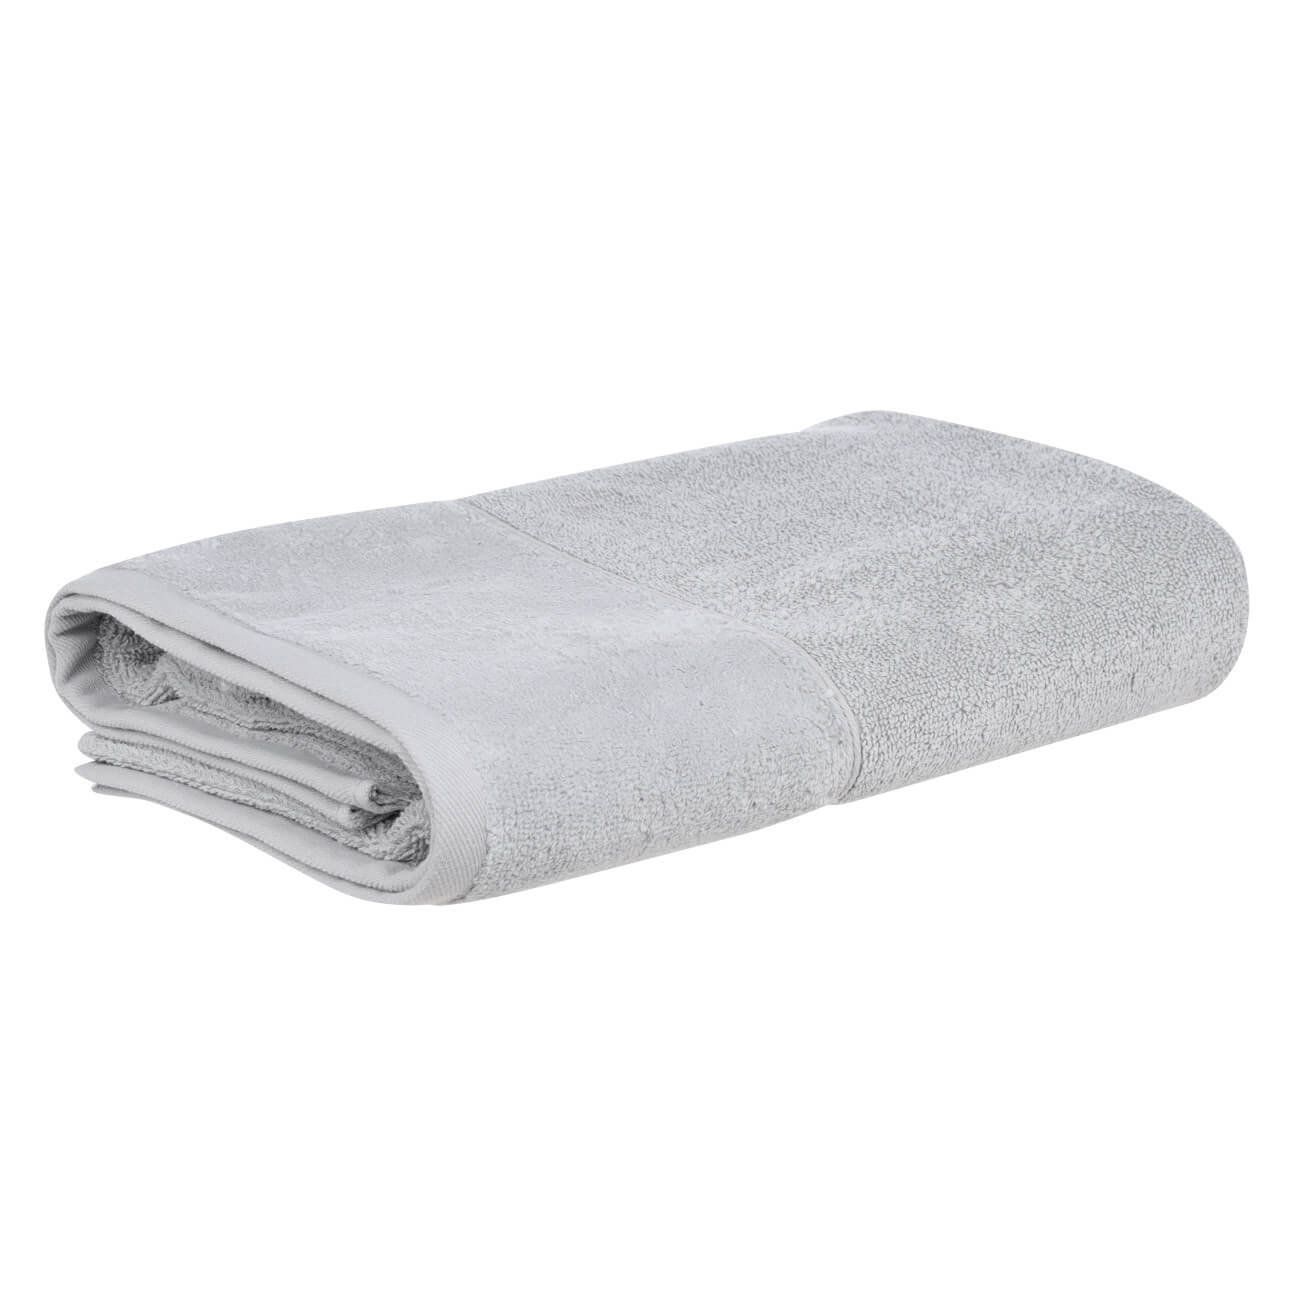 Полотенце, 50х90 см, хлопок, серое, Velvet touch полотенце утро антрацит р 50х90